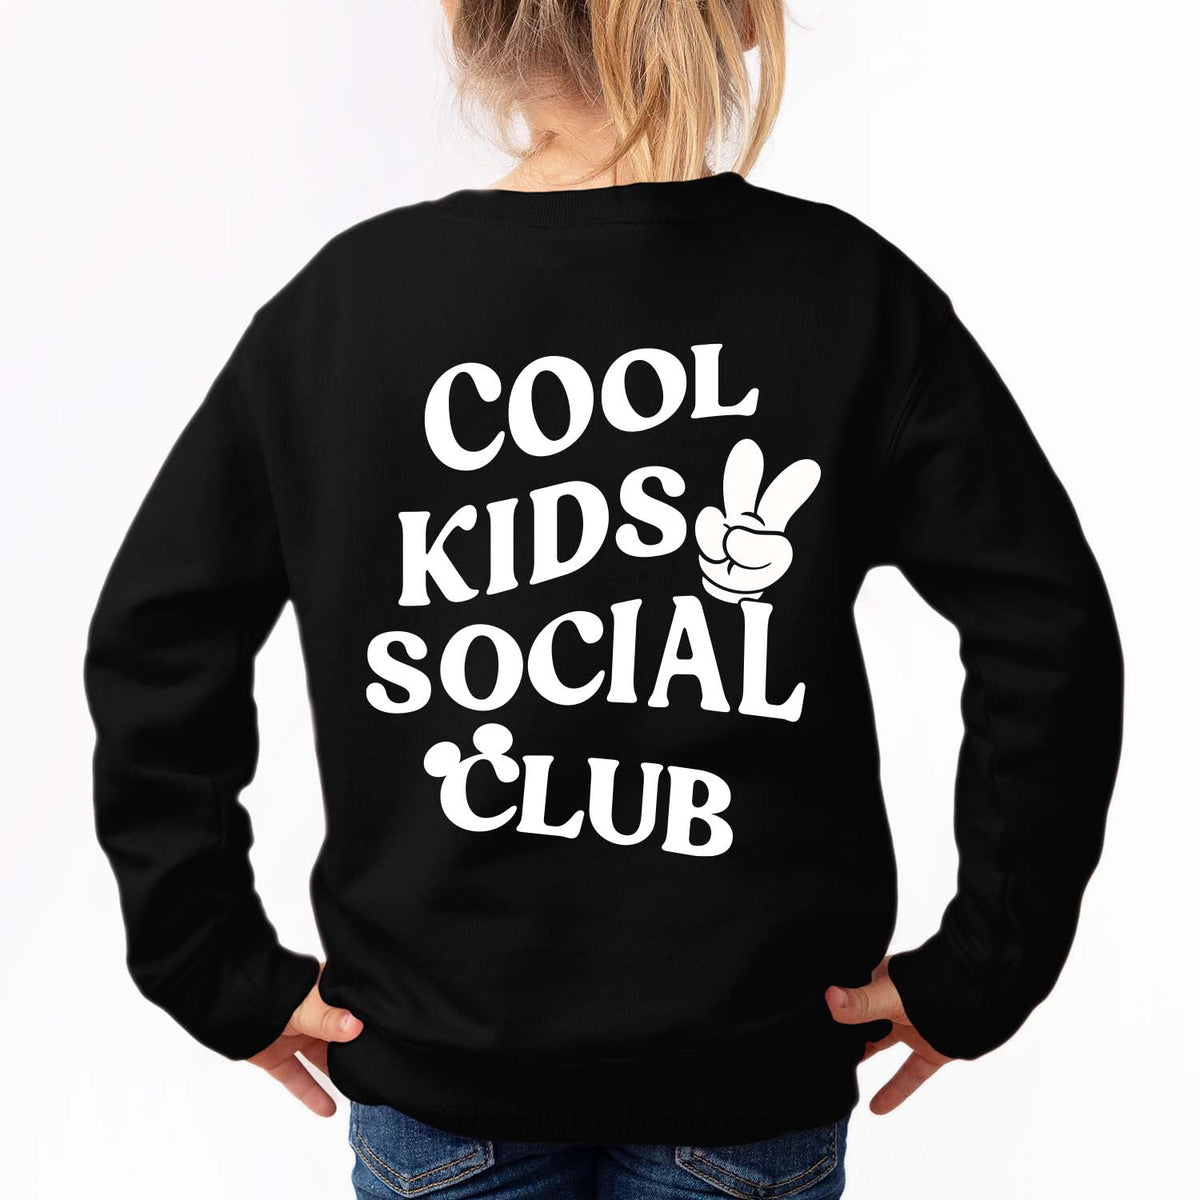 Cool Kids Social Club Sweatshirt for Kids